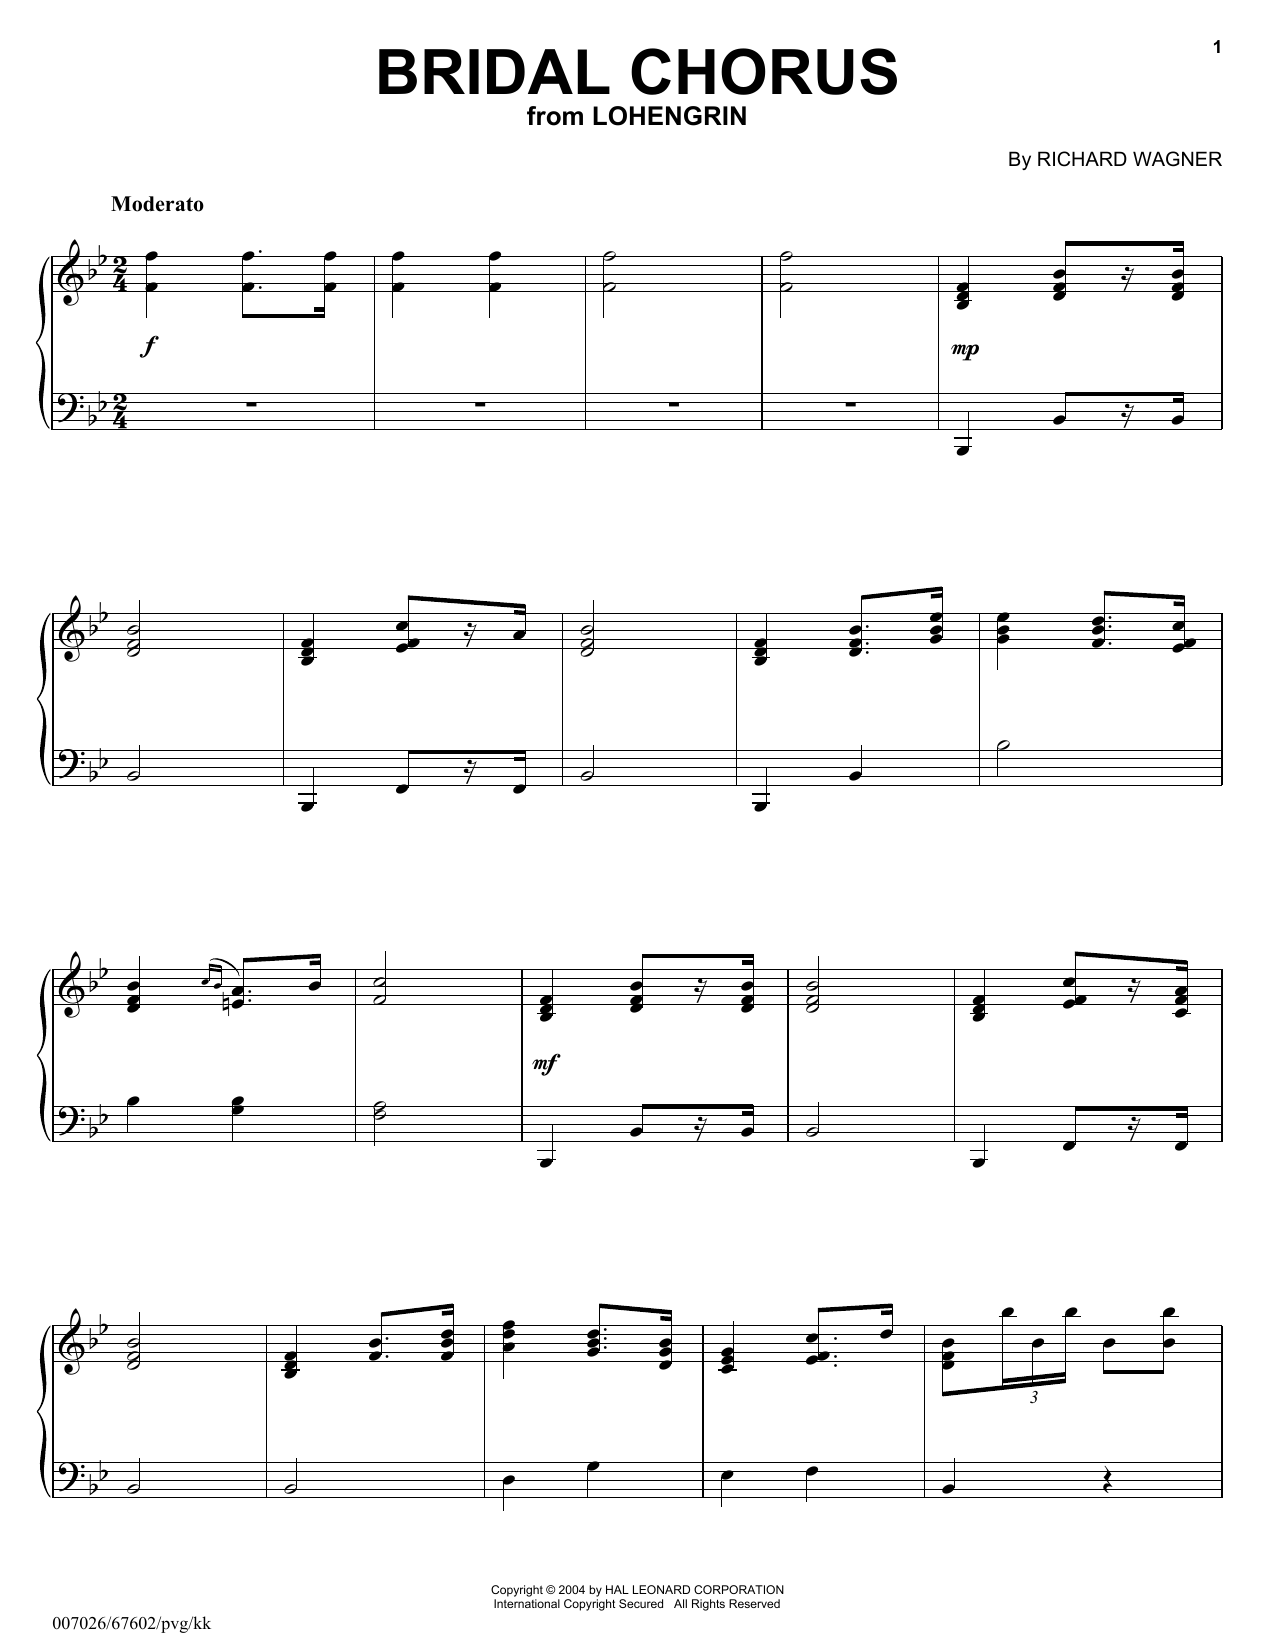 Richard Wagner Bridal Chorus Sheet Music Notes & Chords for Flute - Download or Print PDF